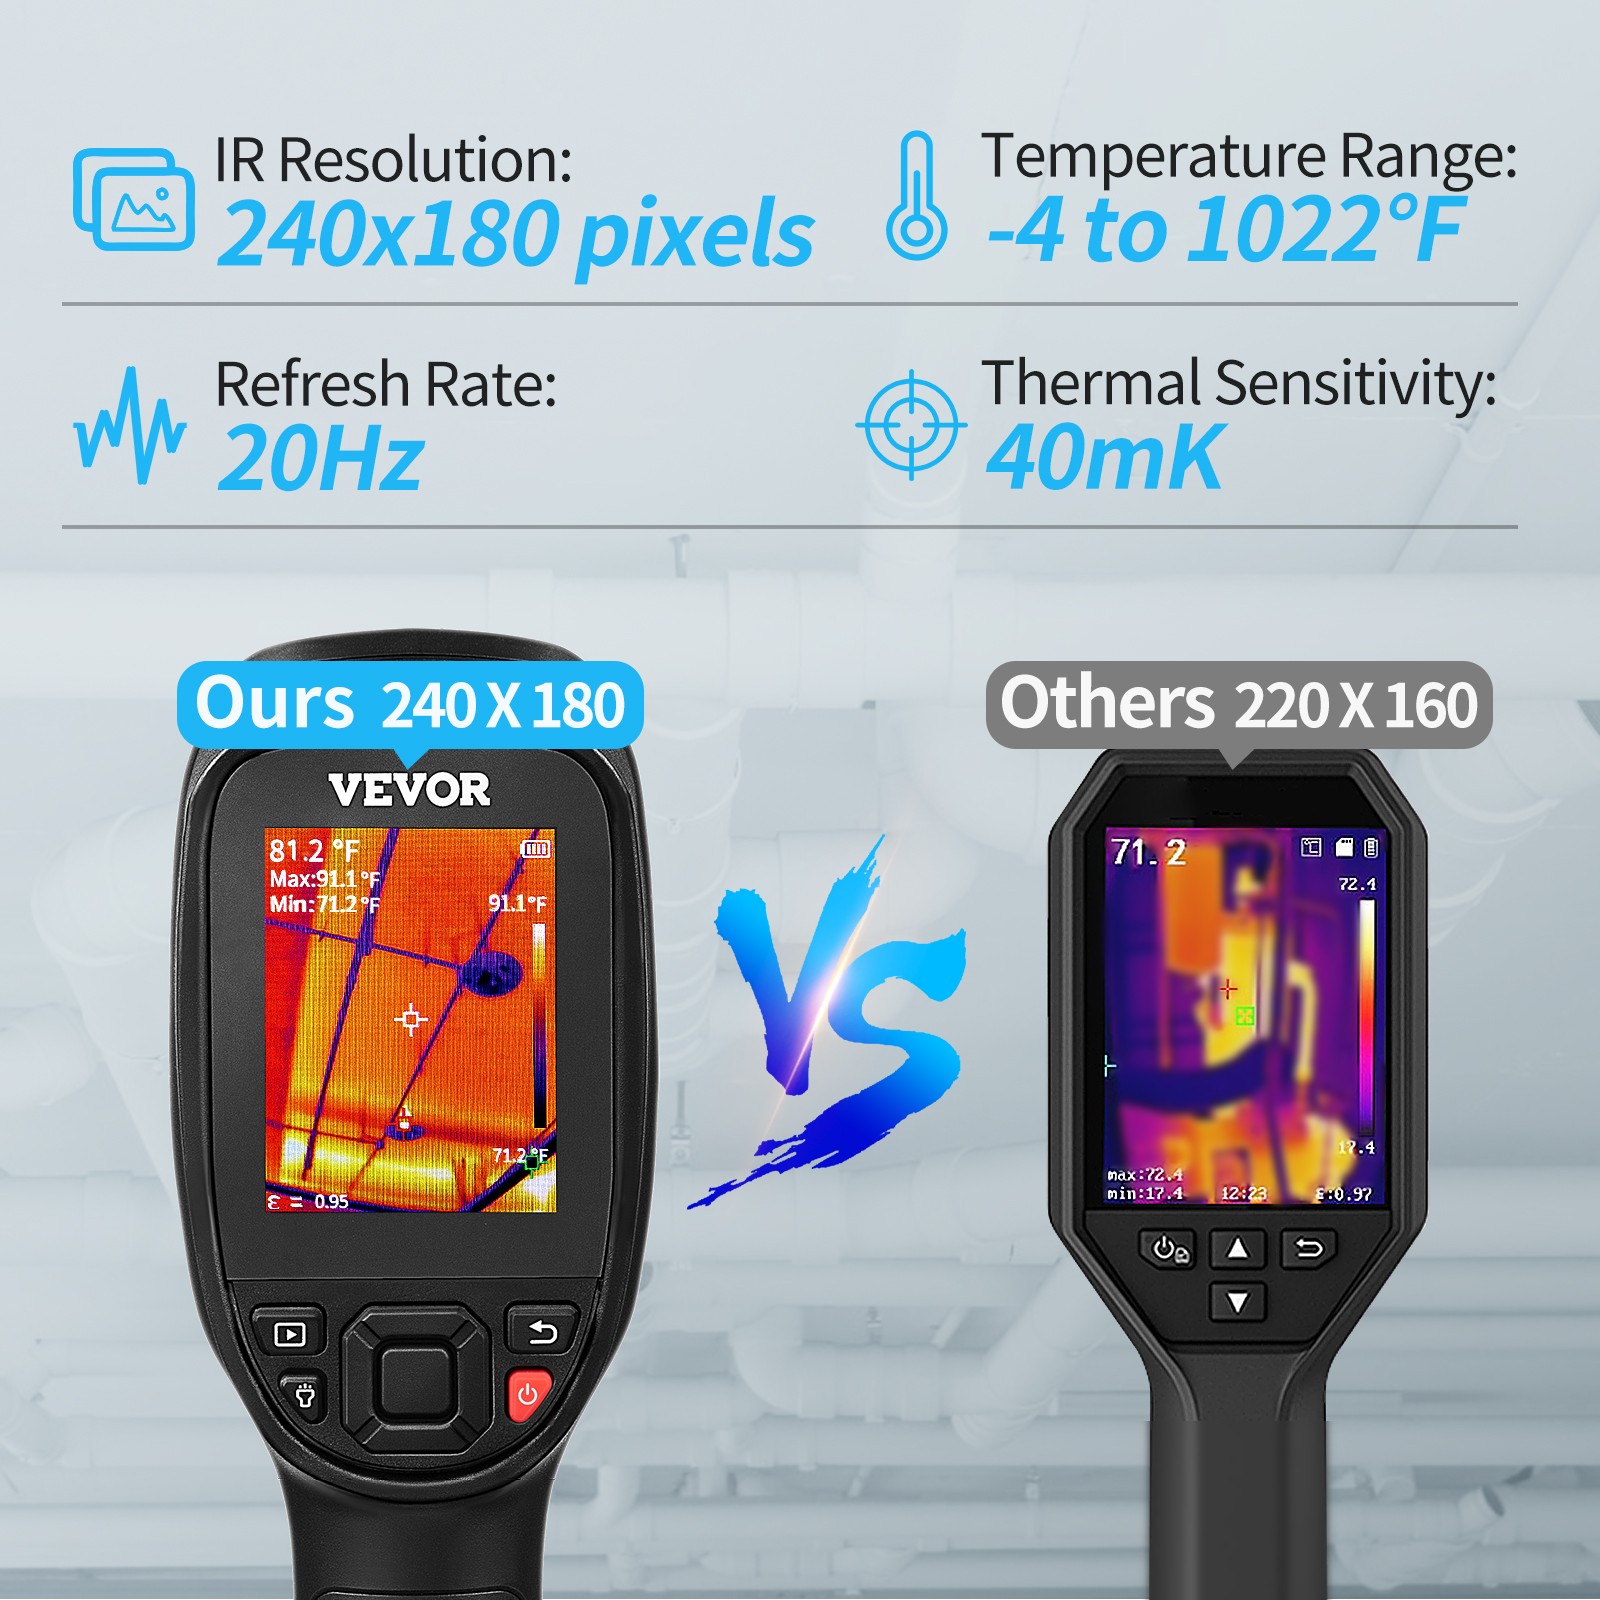 Infrarot-Thermometer -50°C bis 550°C